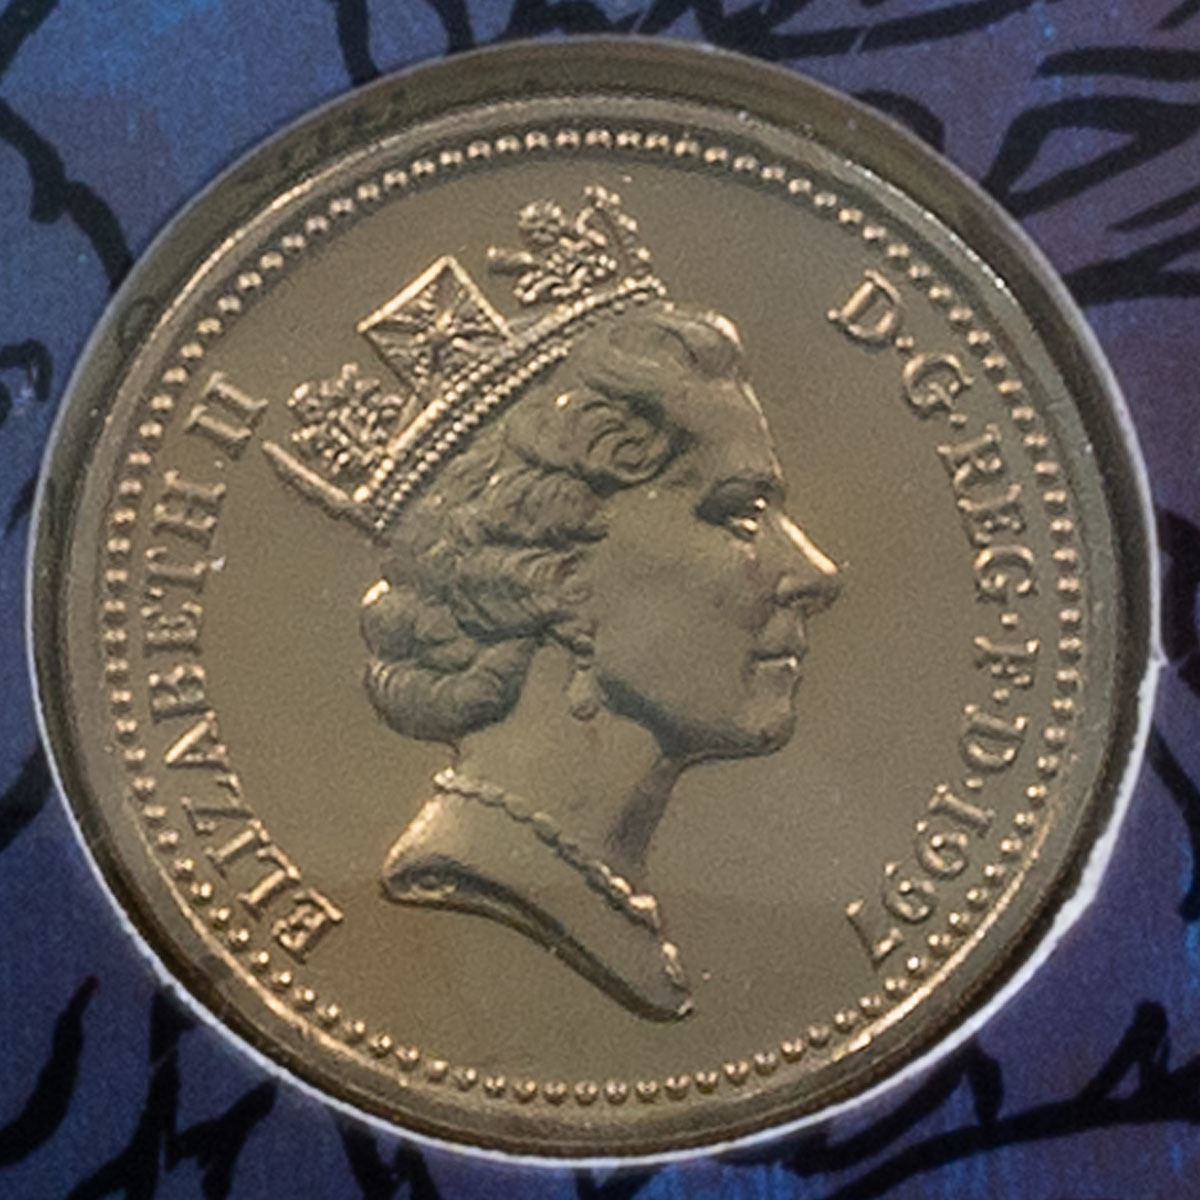 1997-bu-£1-coin-for-england-003-m